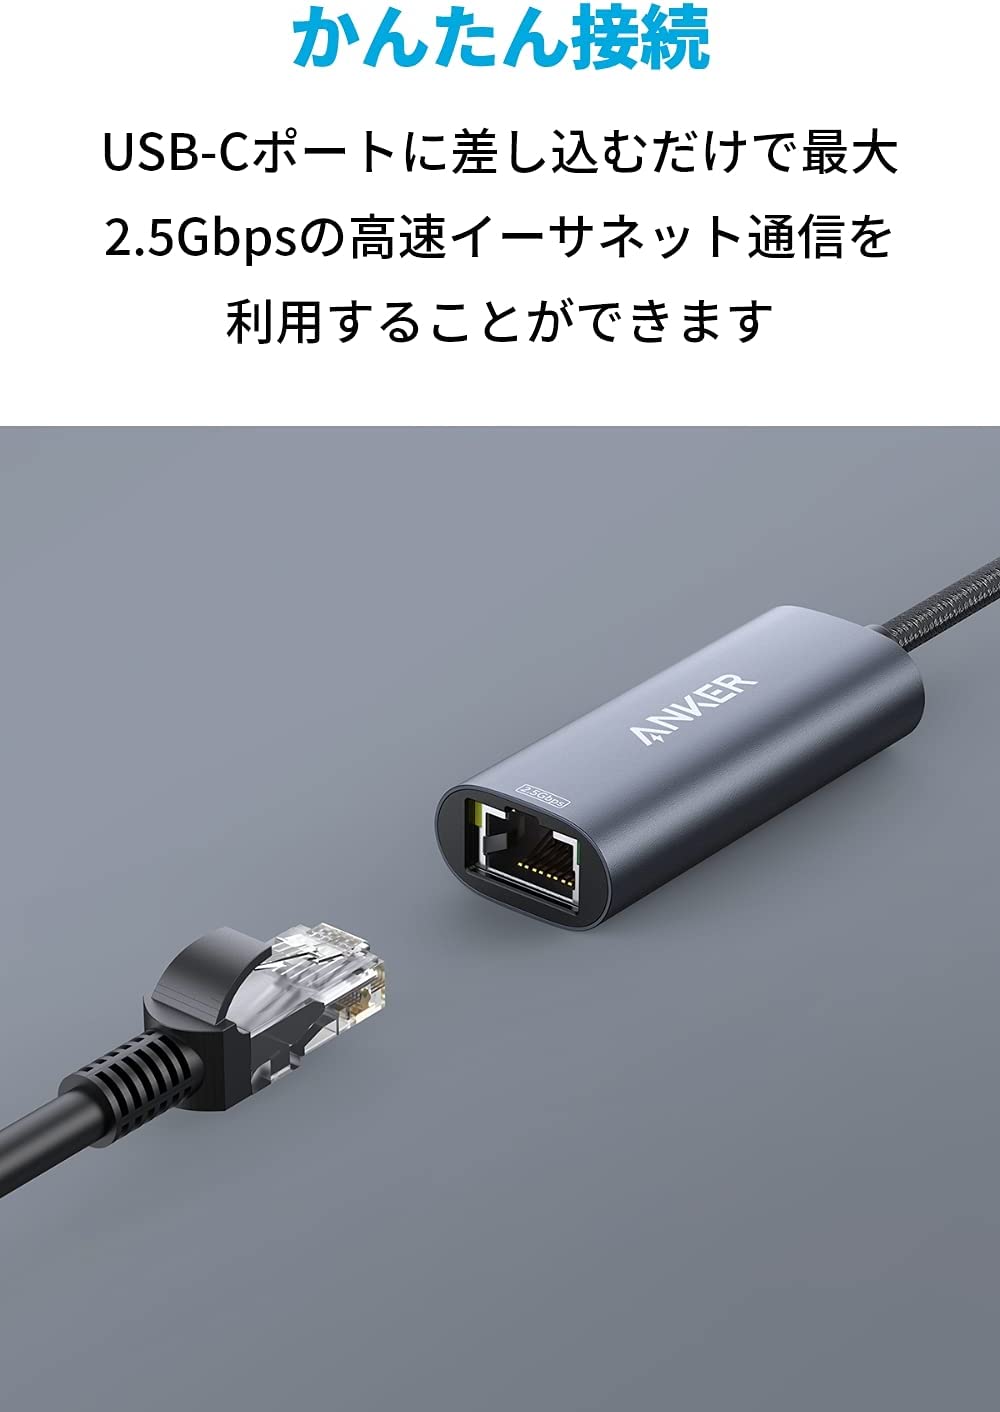 Anker PowerExpand USB-C & 2.5Gbps イーサネットアダプタ 2.5Gbps 高速イーサネット通信 MacBook Air  Pro iPad Pro対応